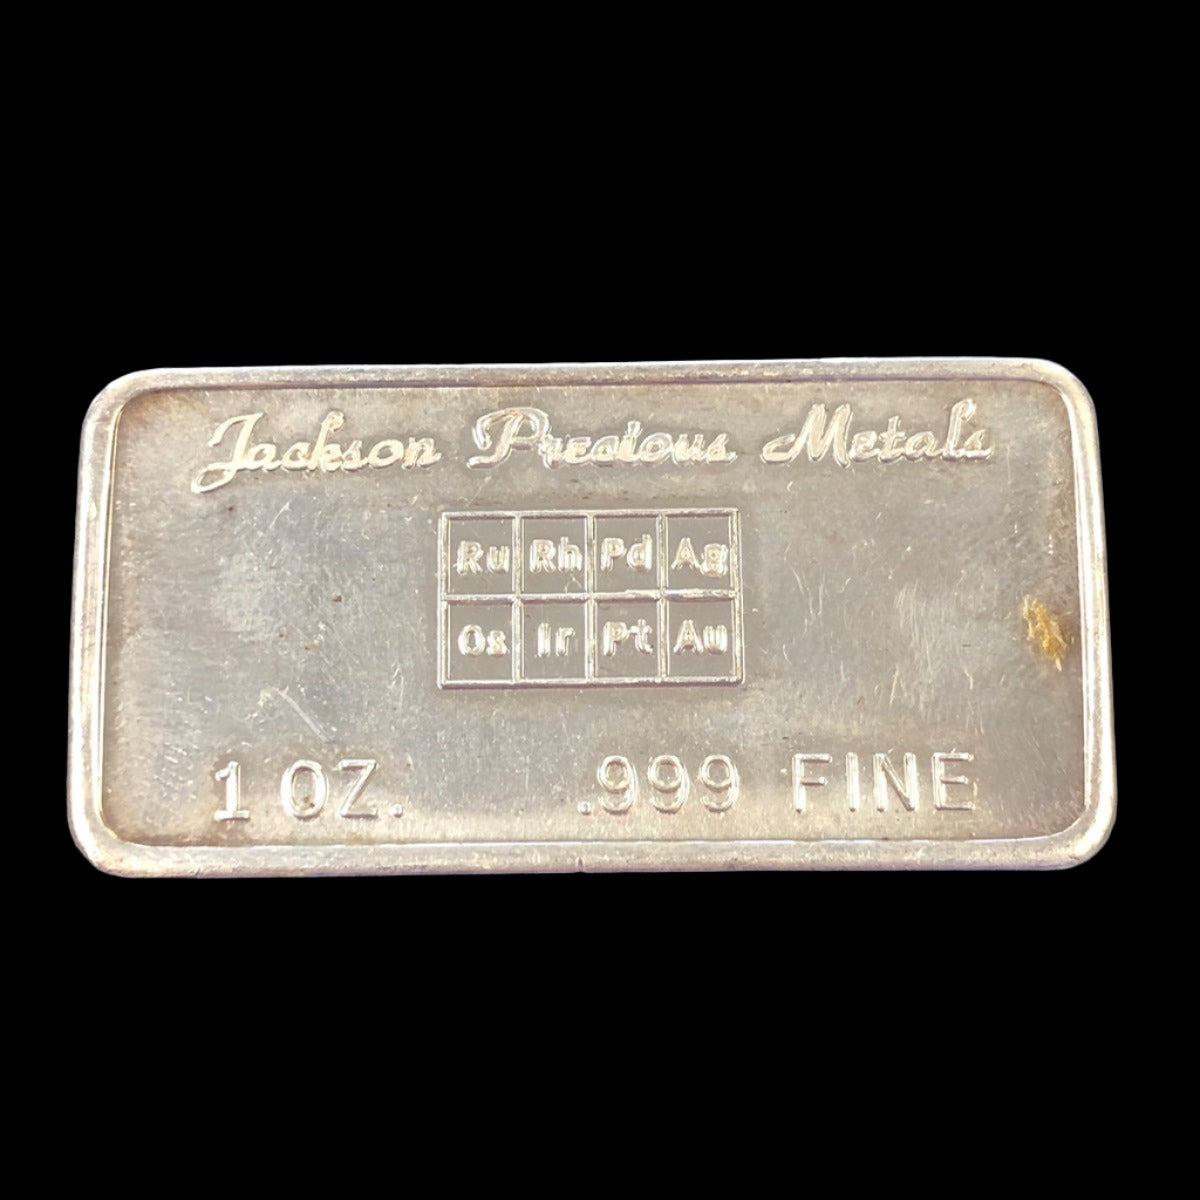 Jackson Precious Metals 1 oz Silver Bar